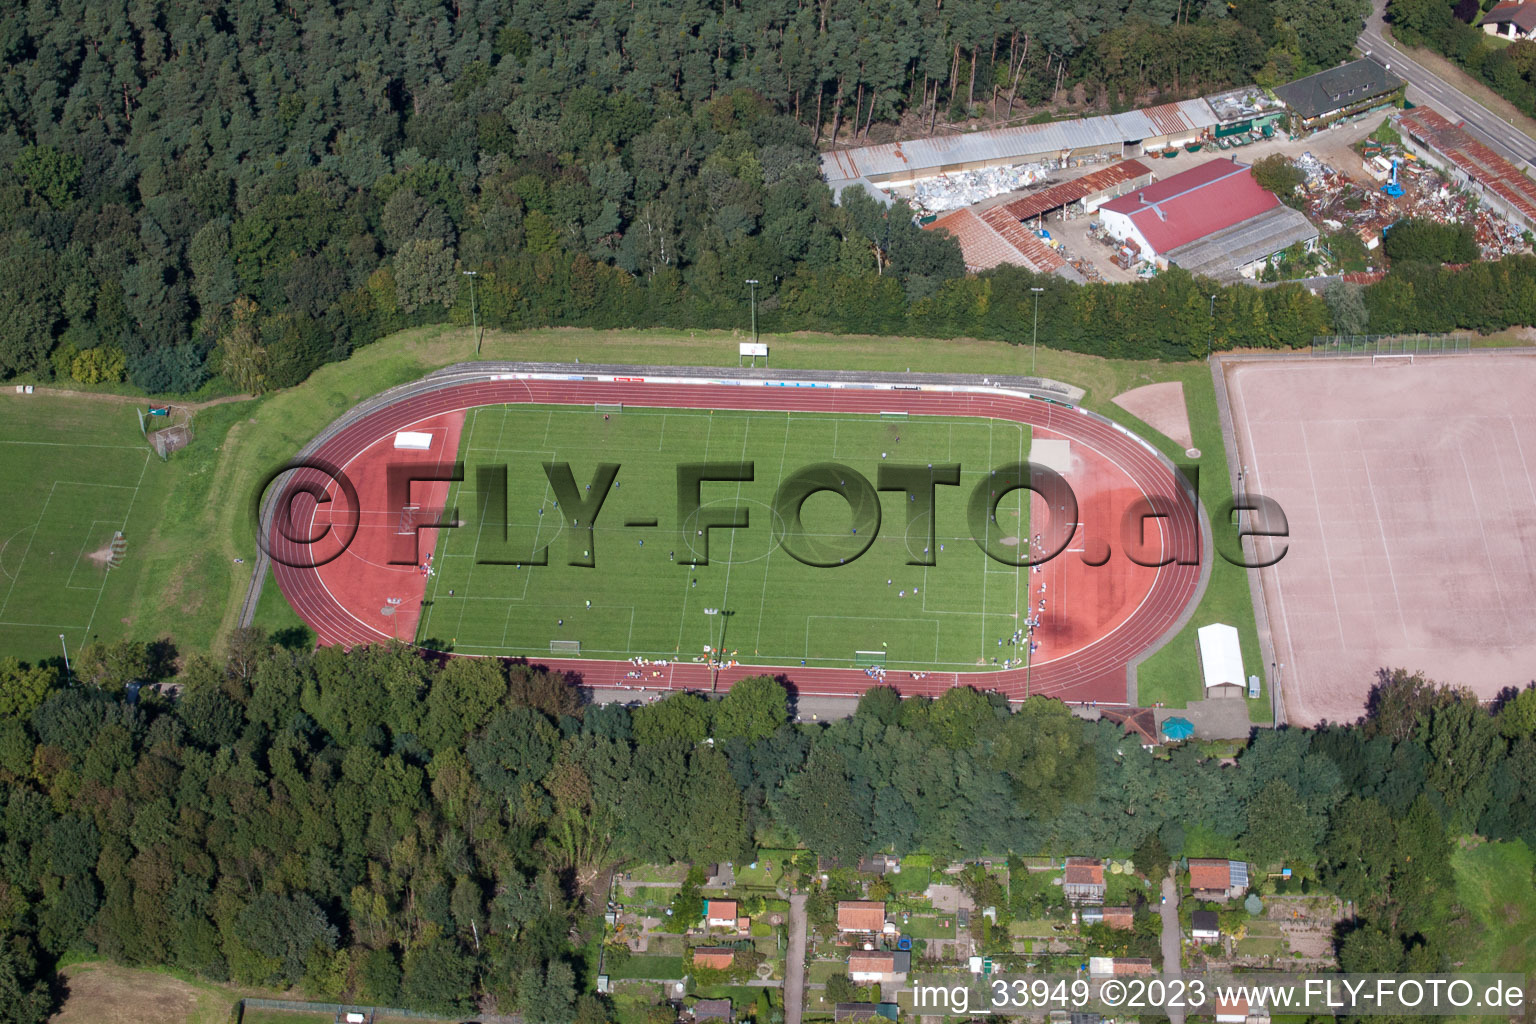 Sports ground in Bellheim in the state Rhineland-Palatinate, Germany